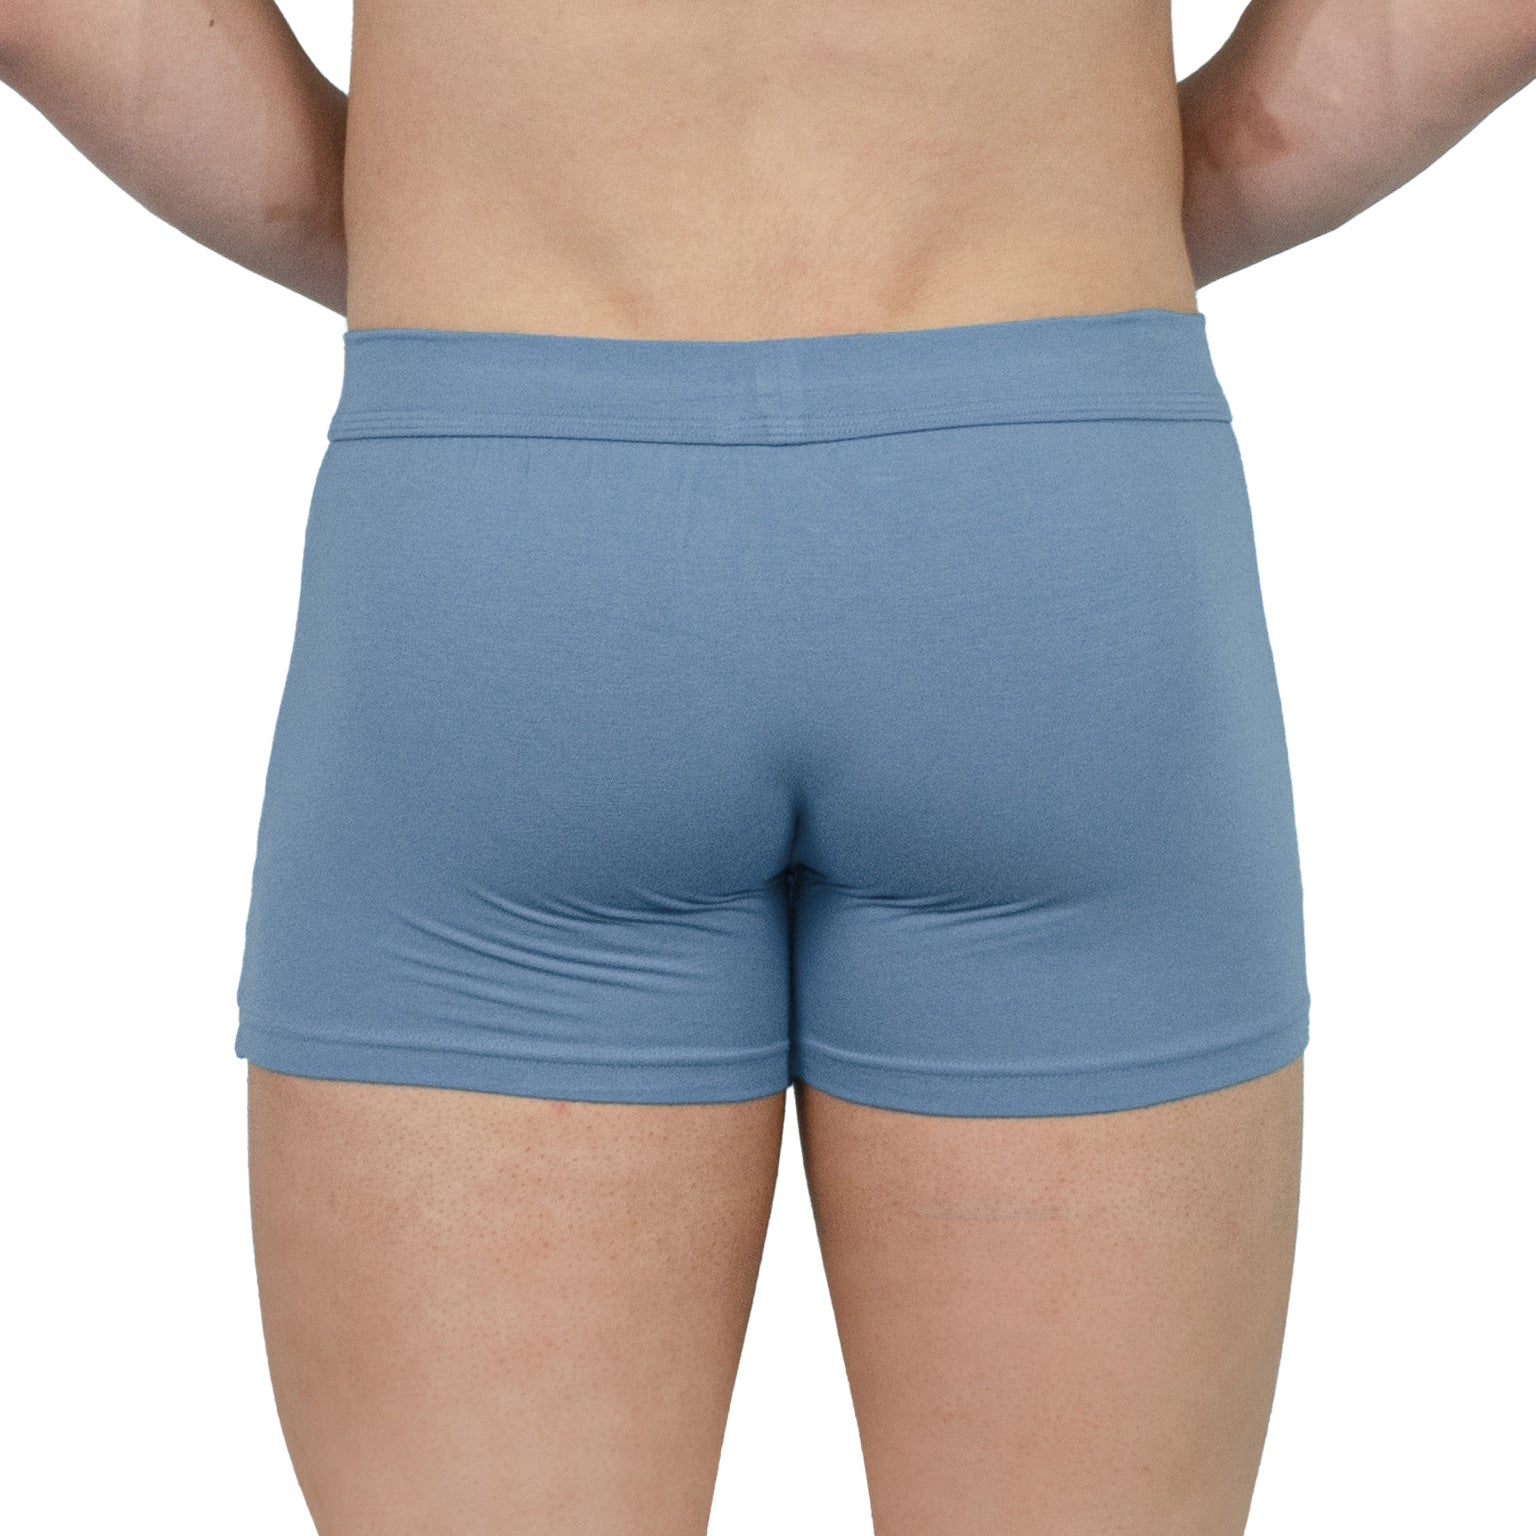 AND1 Men's Underwear - Long Leg Performance Compression Boxer Briefs (5  Pack)